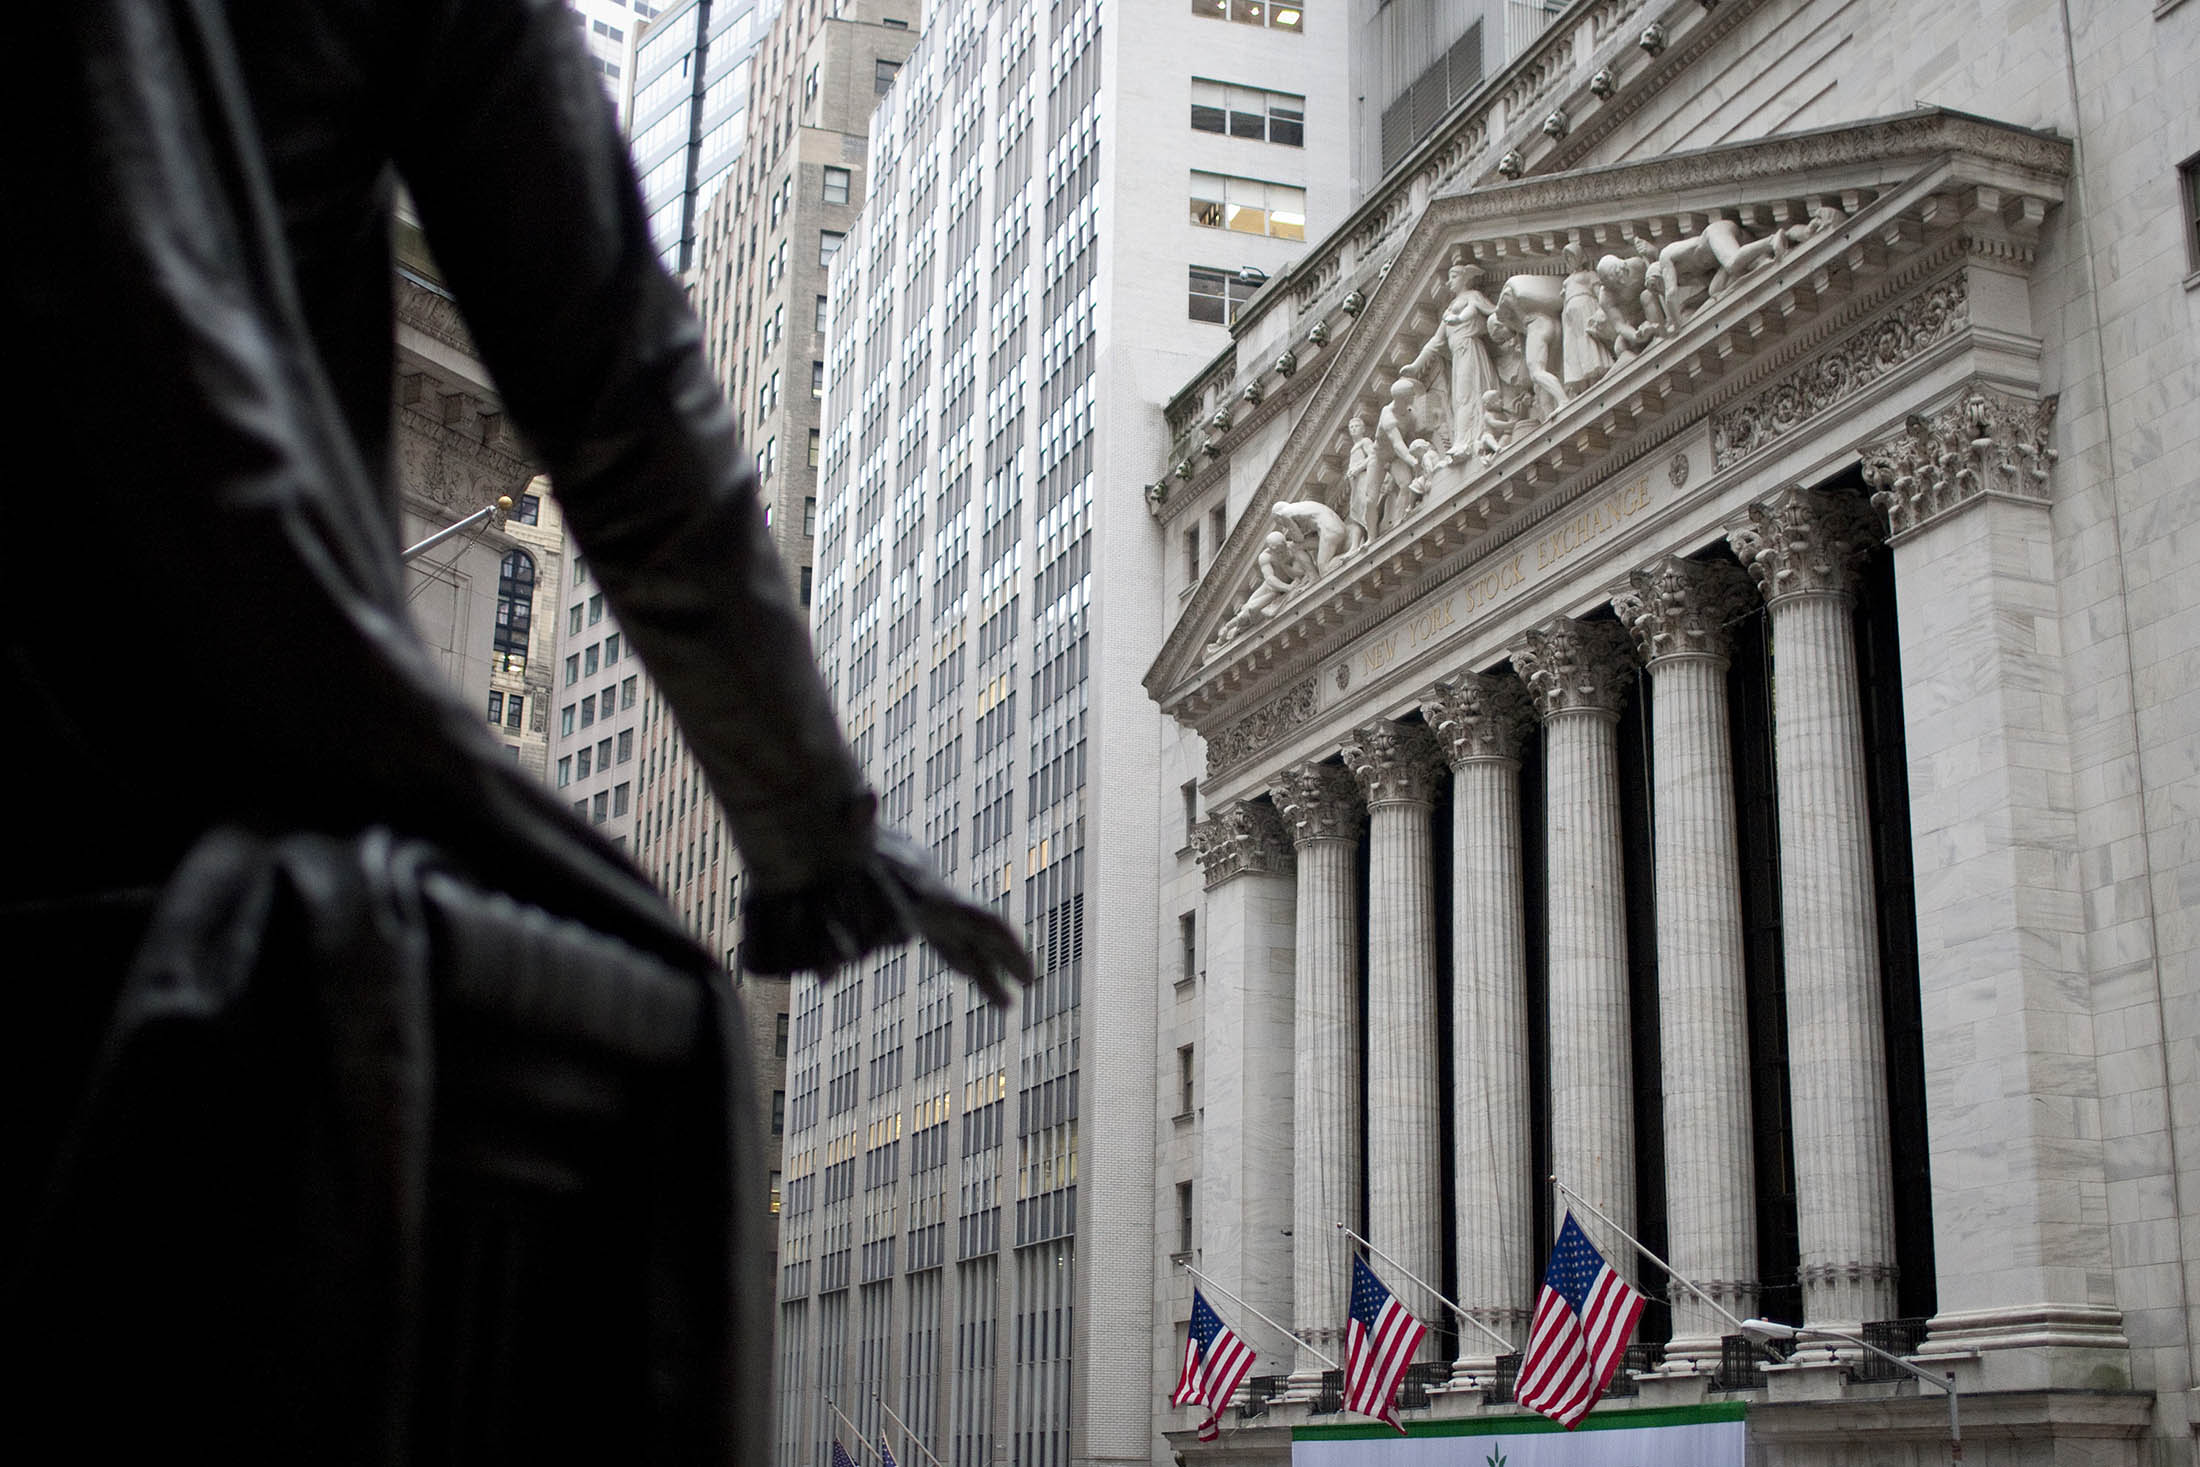 The New York Stock Exchange (NYSE)
